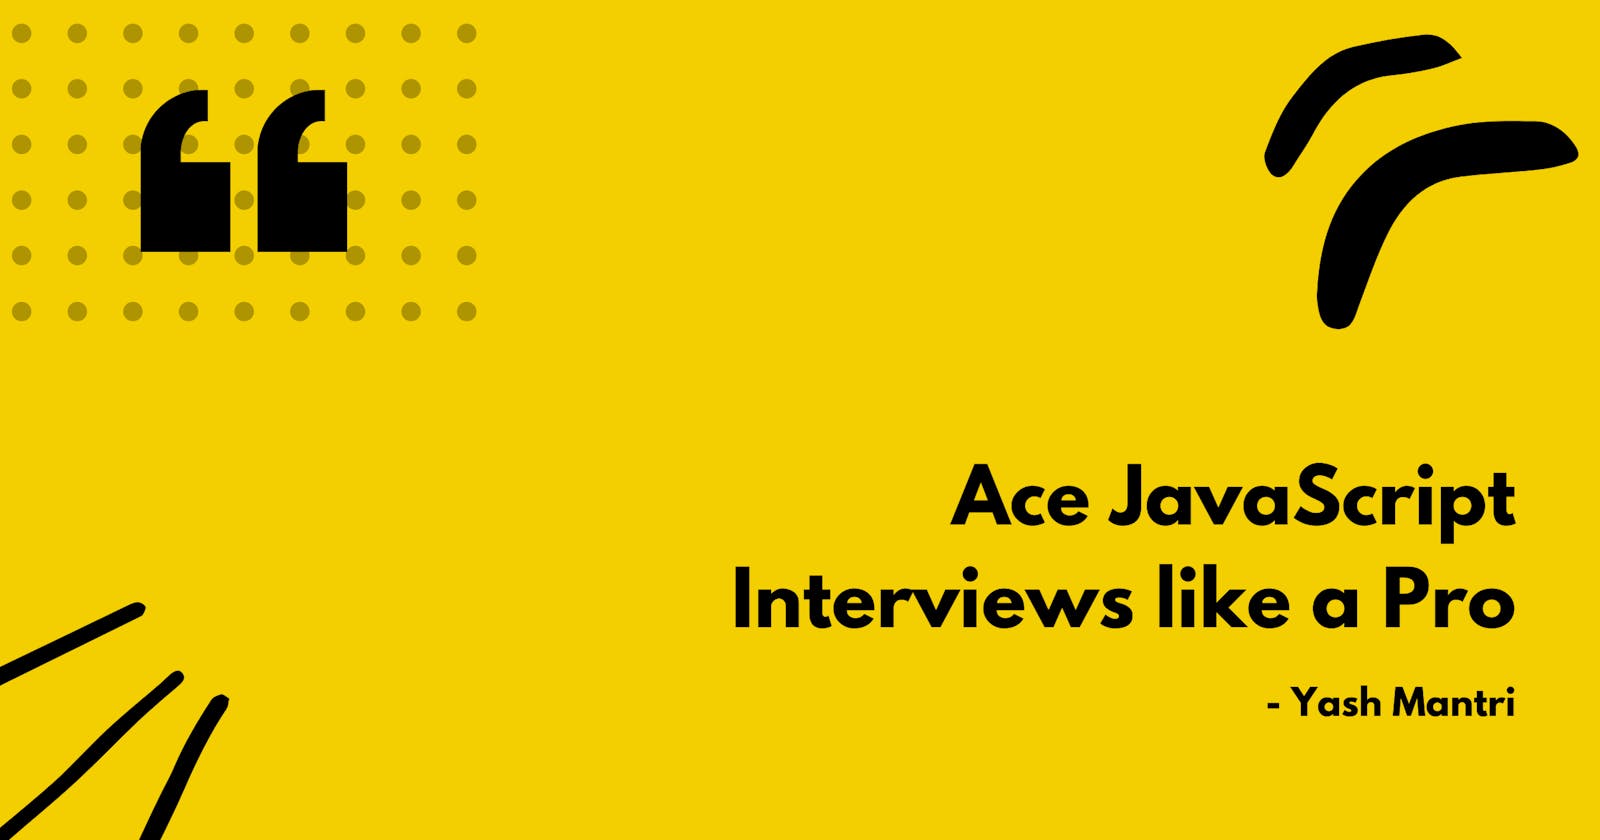 Ace JavaScript Interviews like a Pro